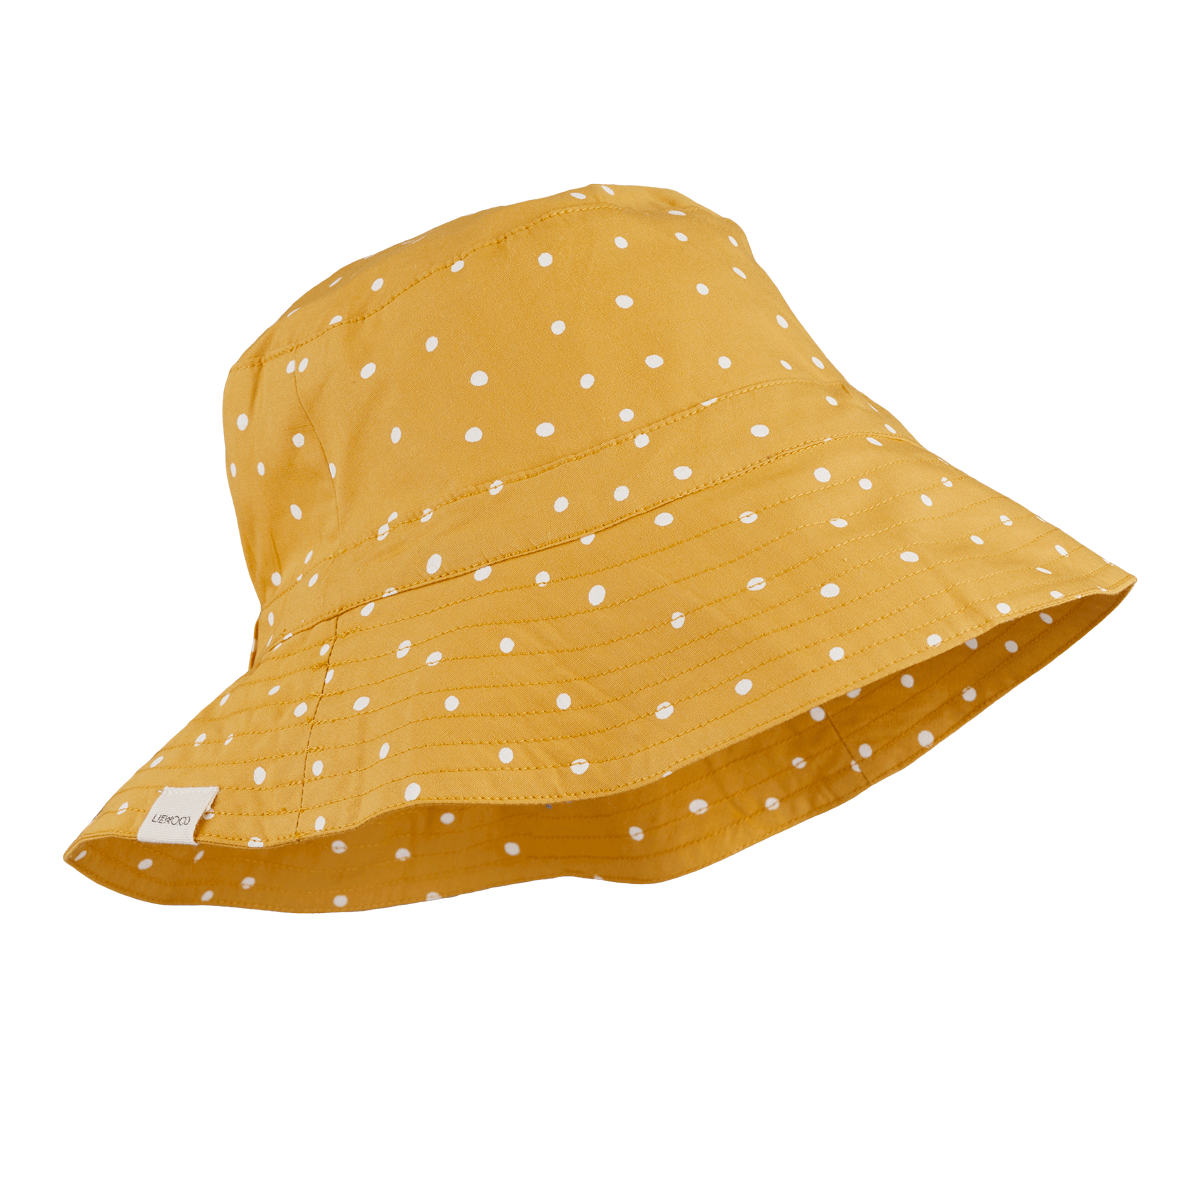 Liewood Sander bucket hat - Confetti yellow mellow mix